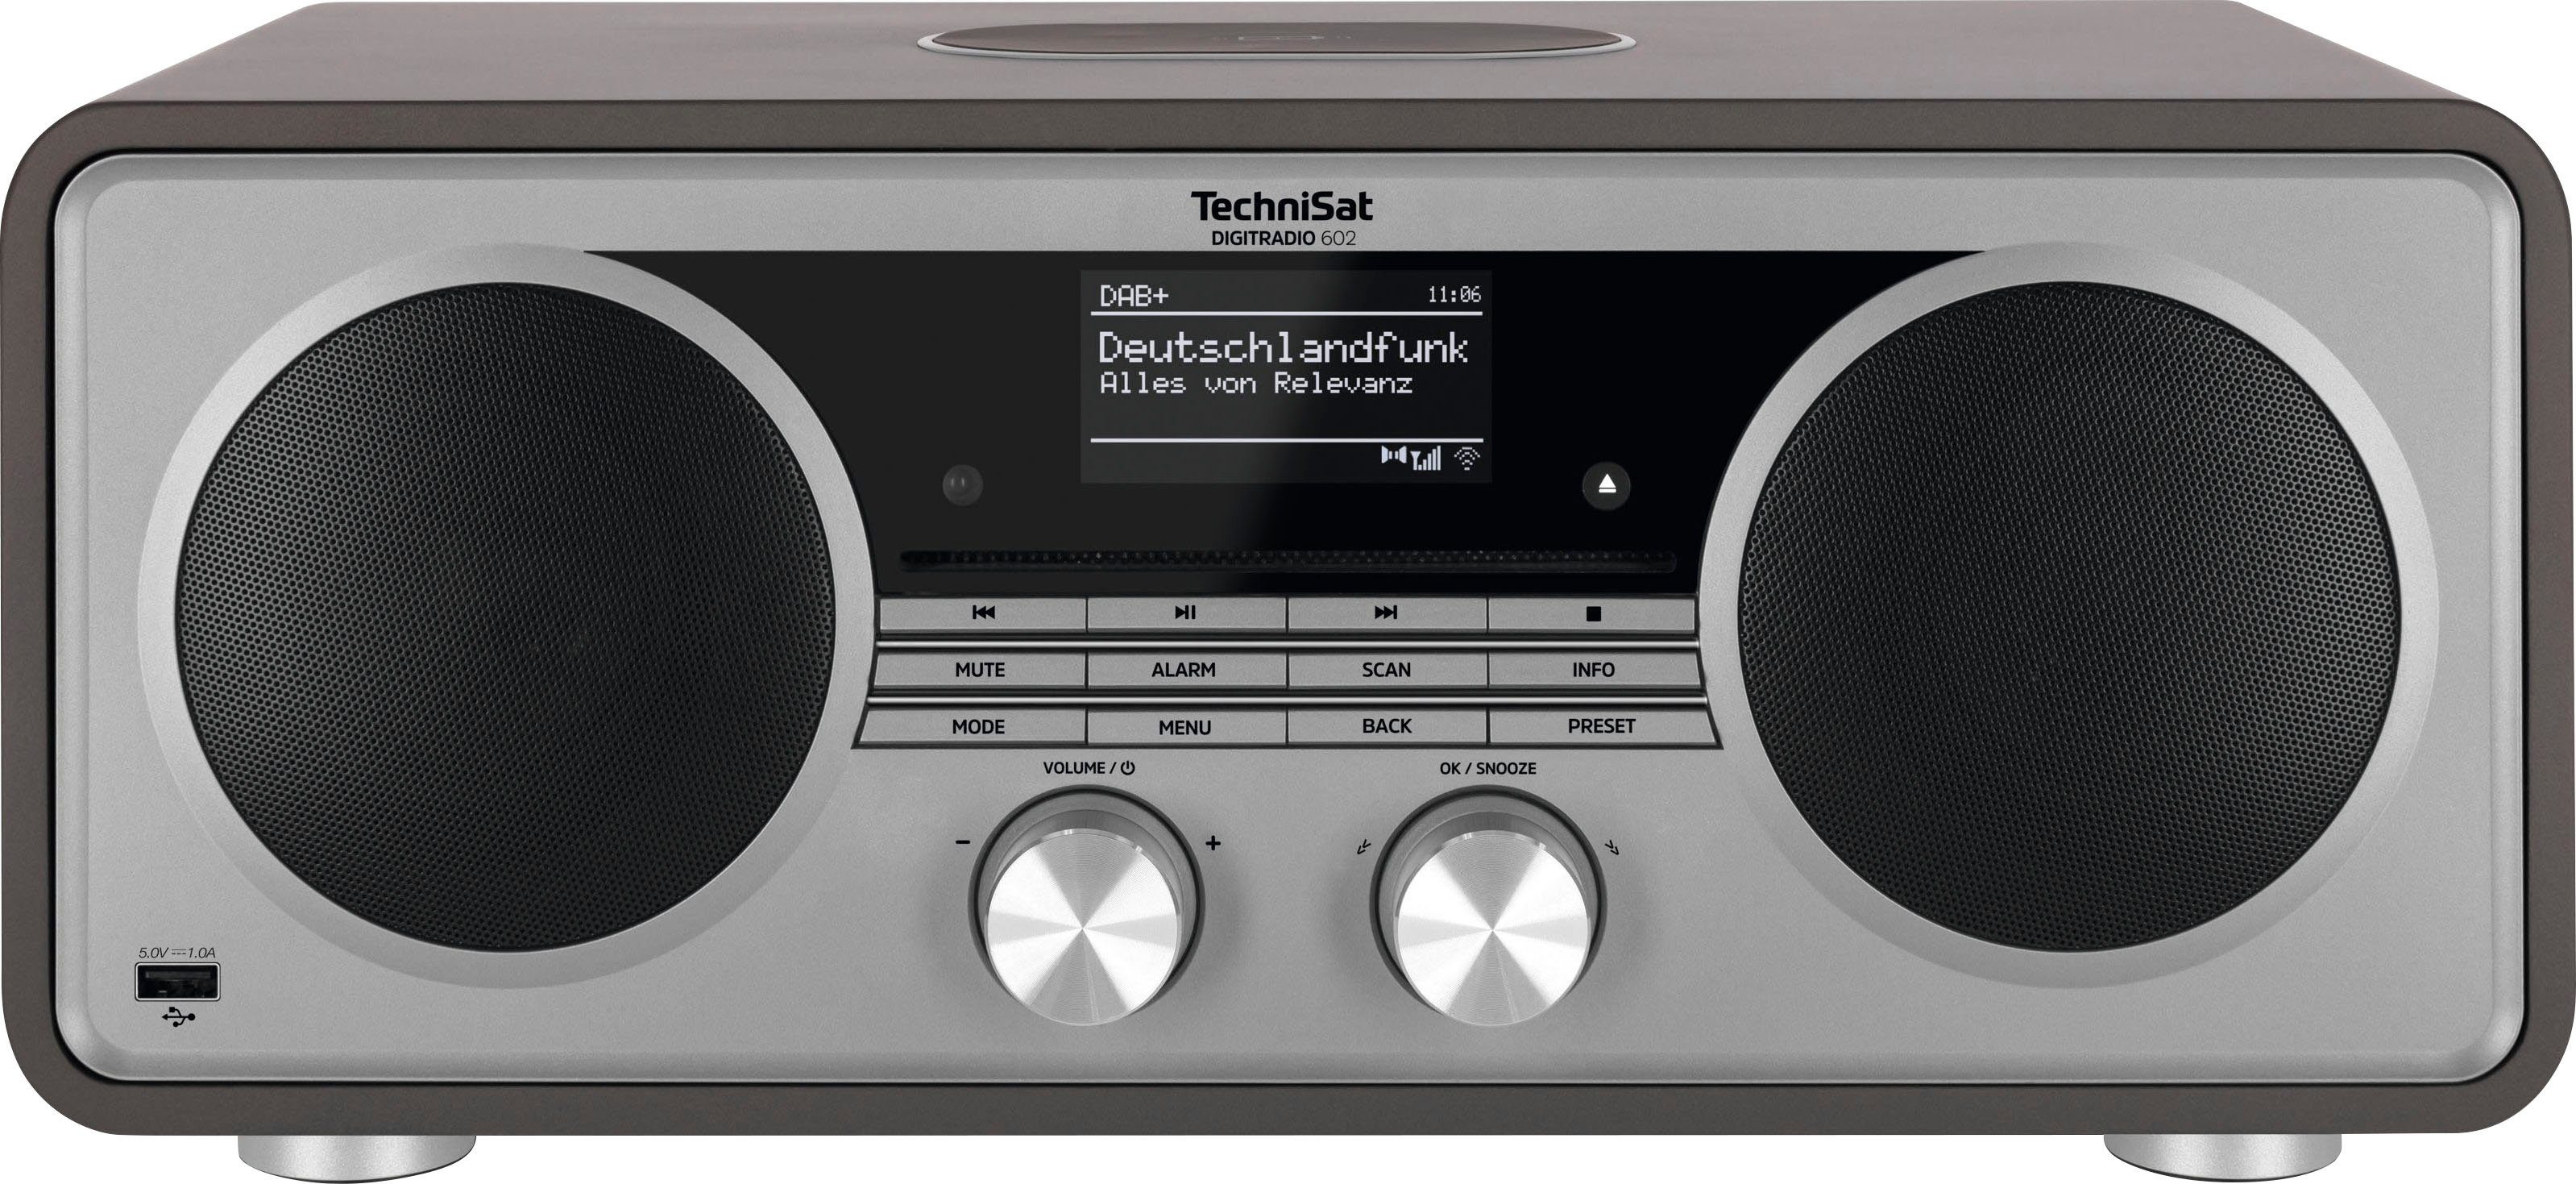 TechniSat DIGITRADIO 602 Internet-Radio 70 CD-Player) UKW Anthrazit/Silber (DAB), RDS, W, mit Stereoanlage, (Digitalradio